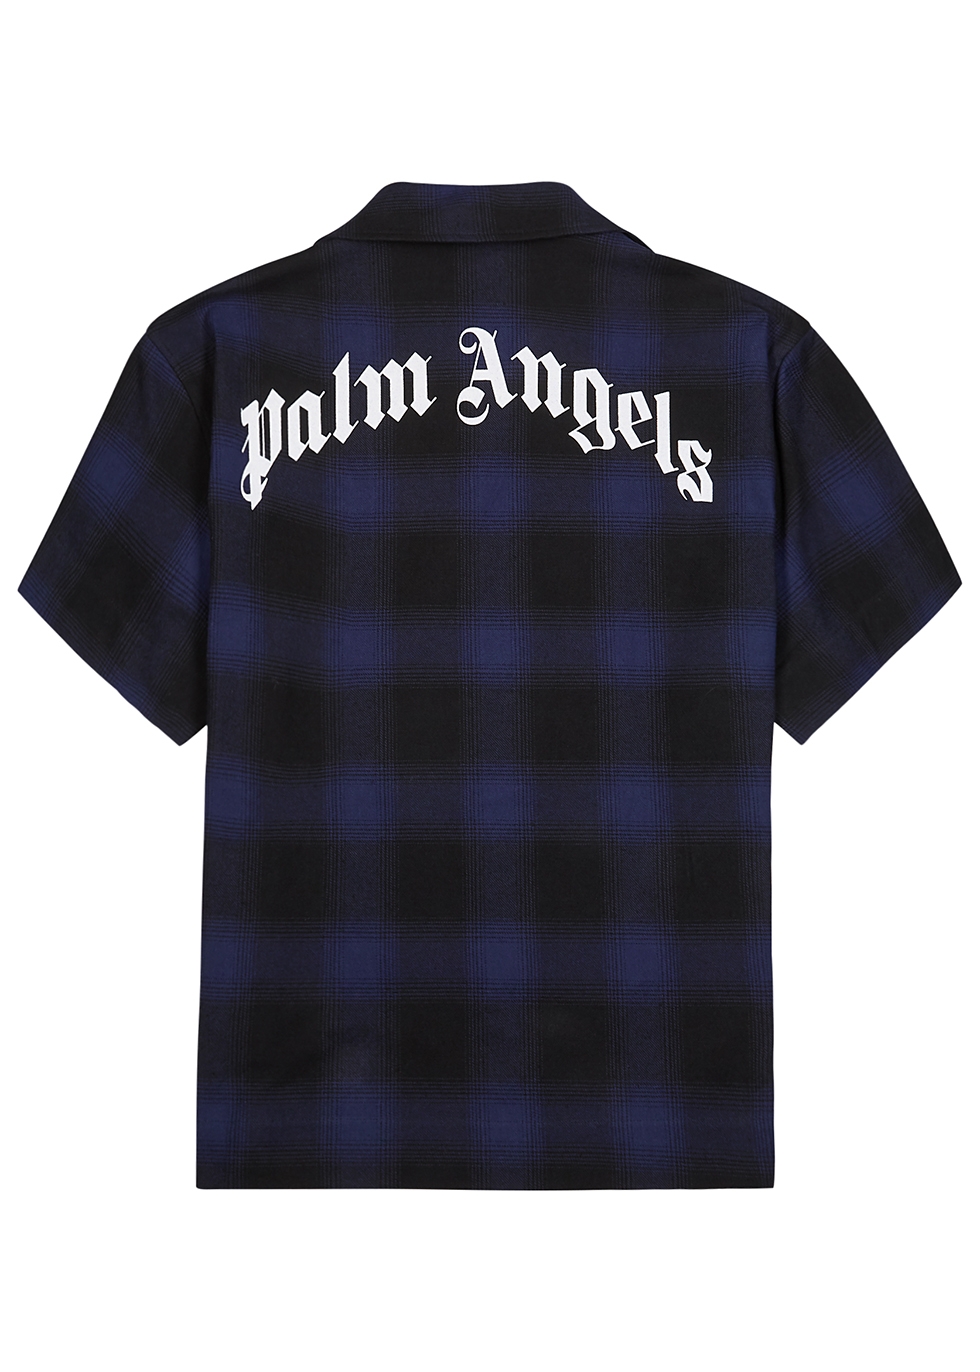 palm angels shirt blue